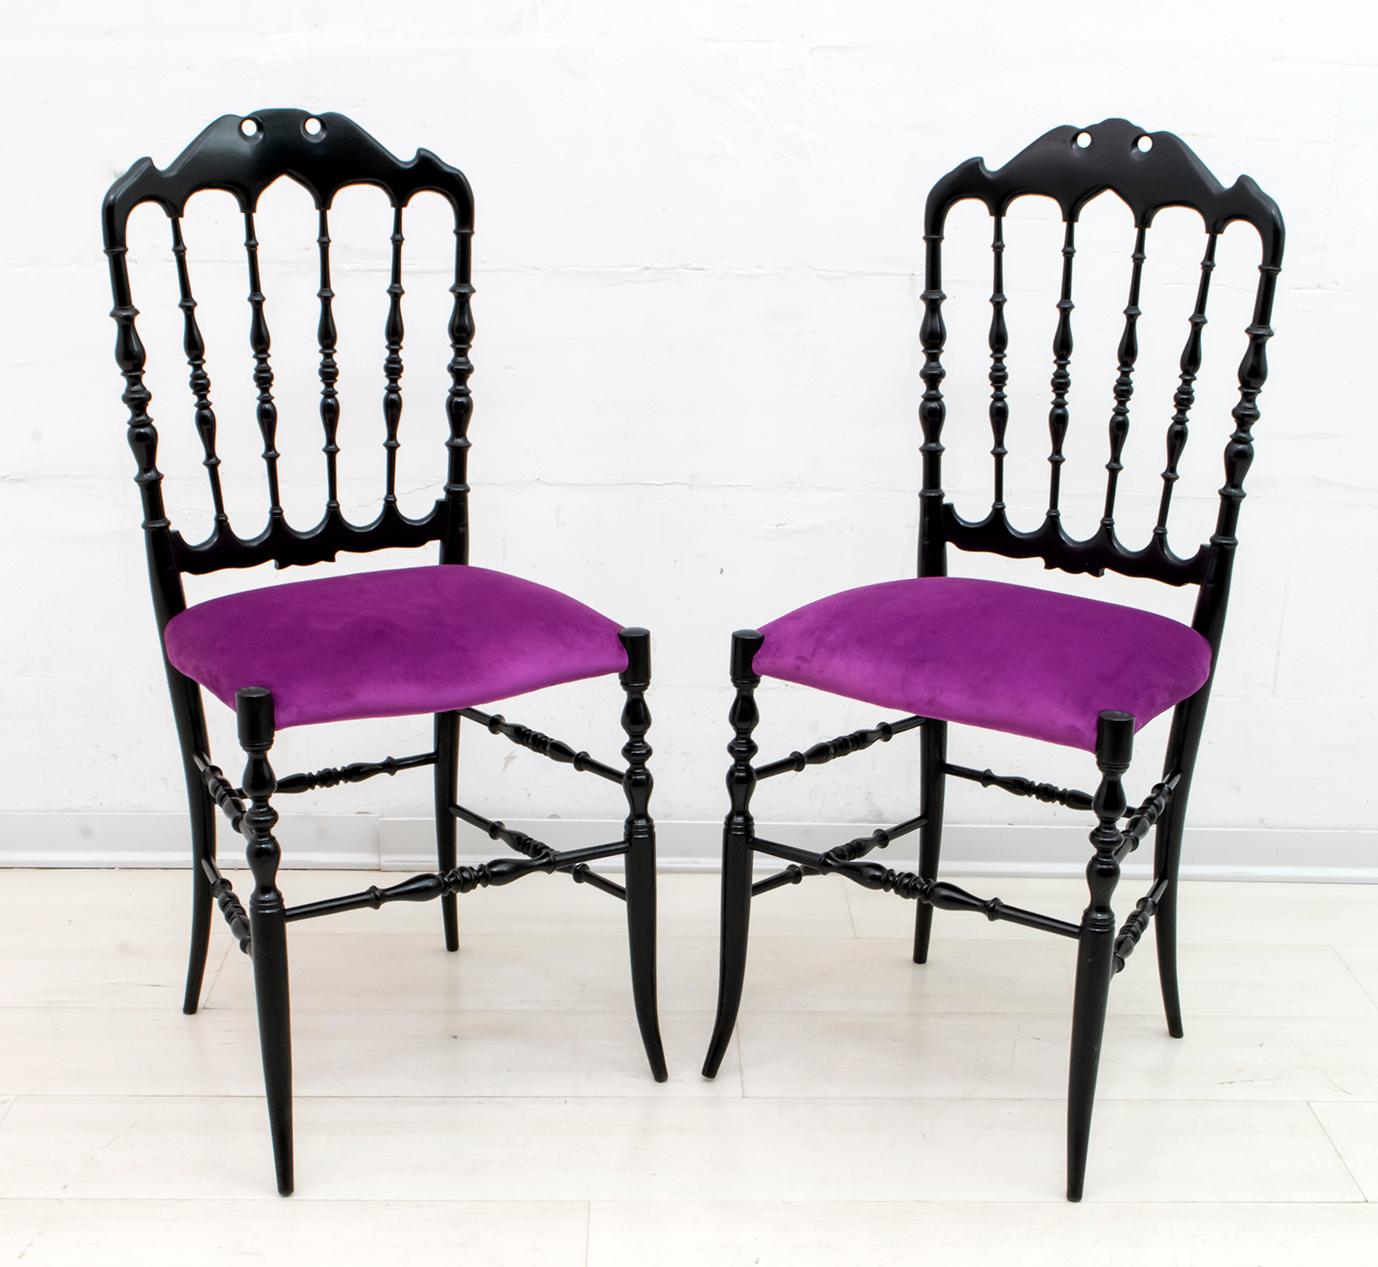 Mid-20th Century Pair of Giuseppe Gaetano Descalzi Midcentury Italian Chiavari Chairs, 1950s For Sale